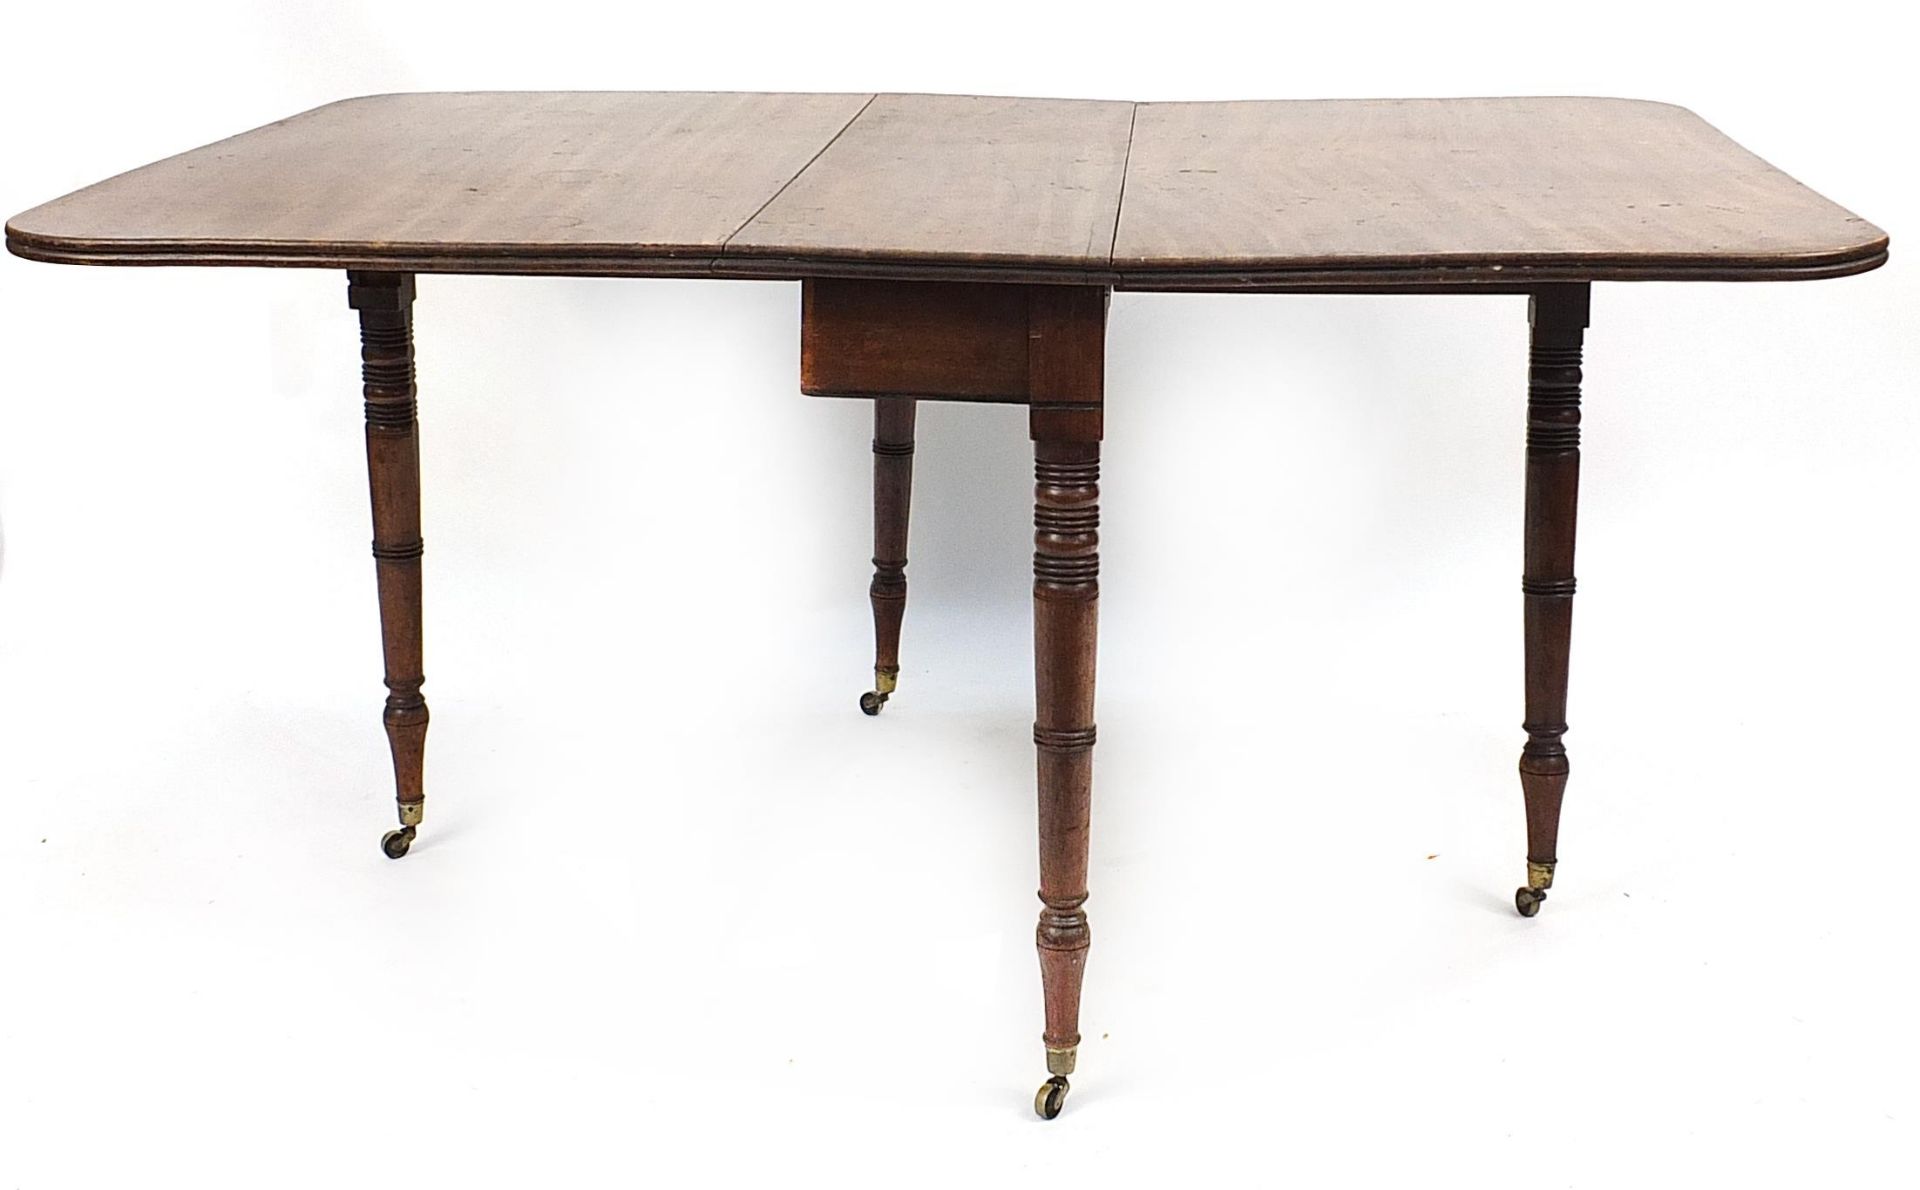 Victorian mahogany drop leaf table, 71cm H x 98cm W x 32cm D when folded